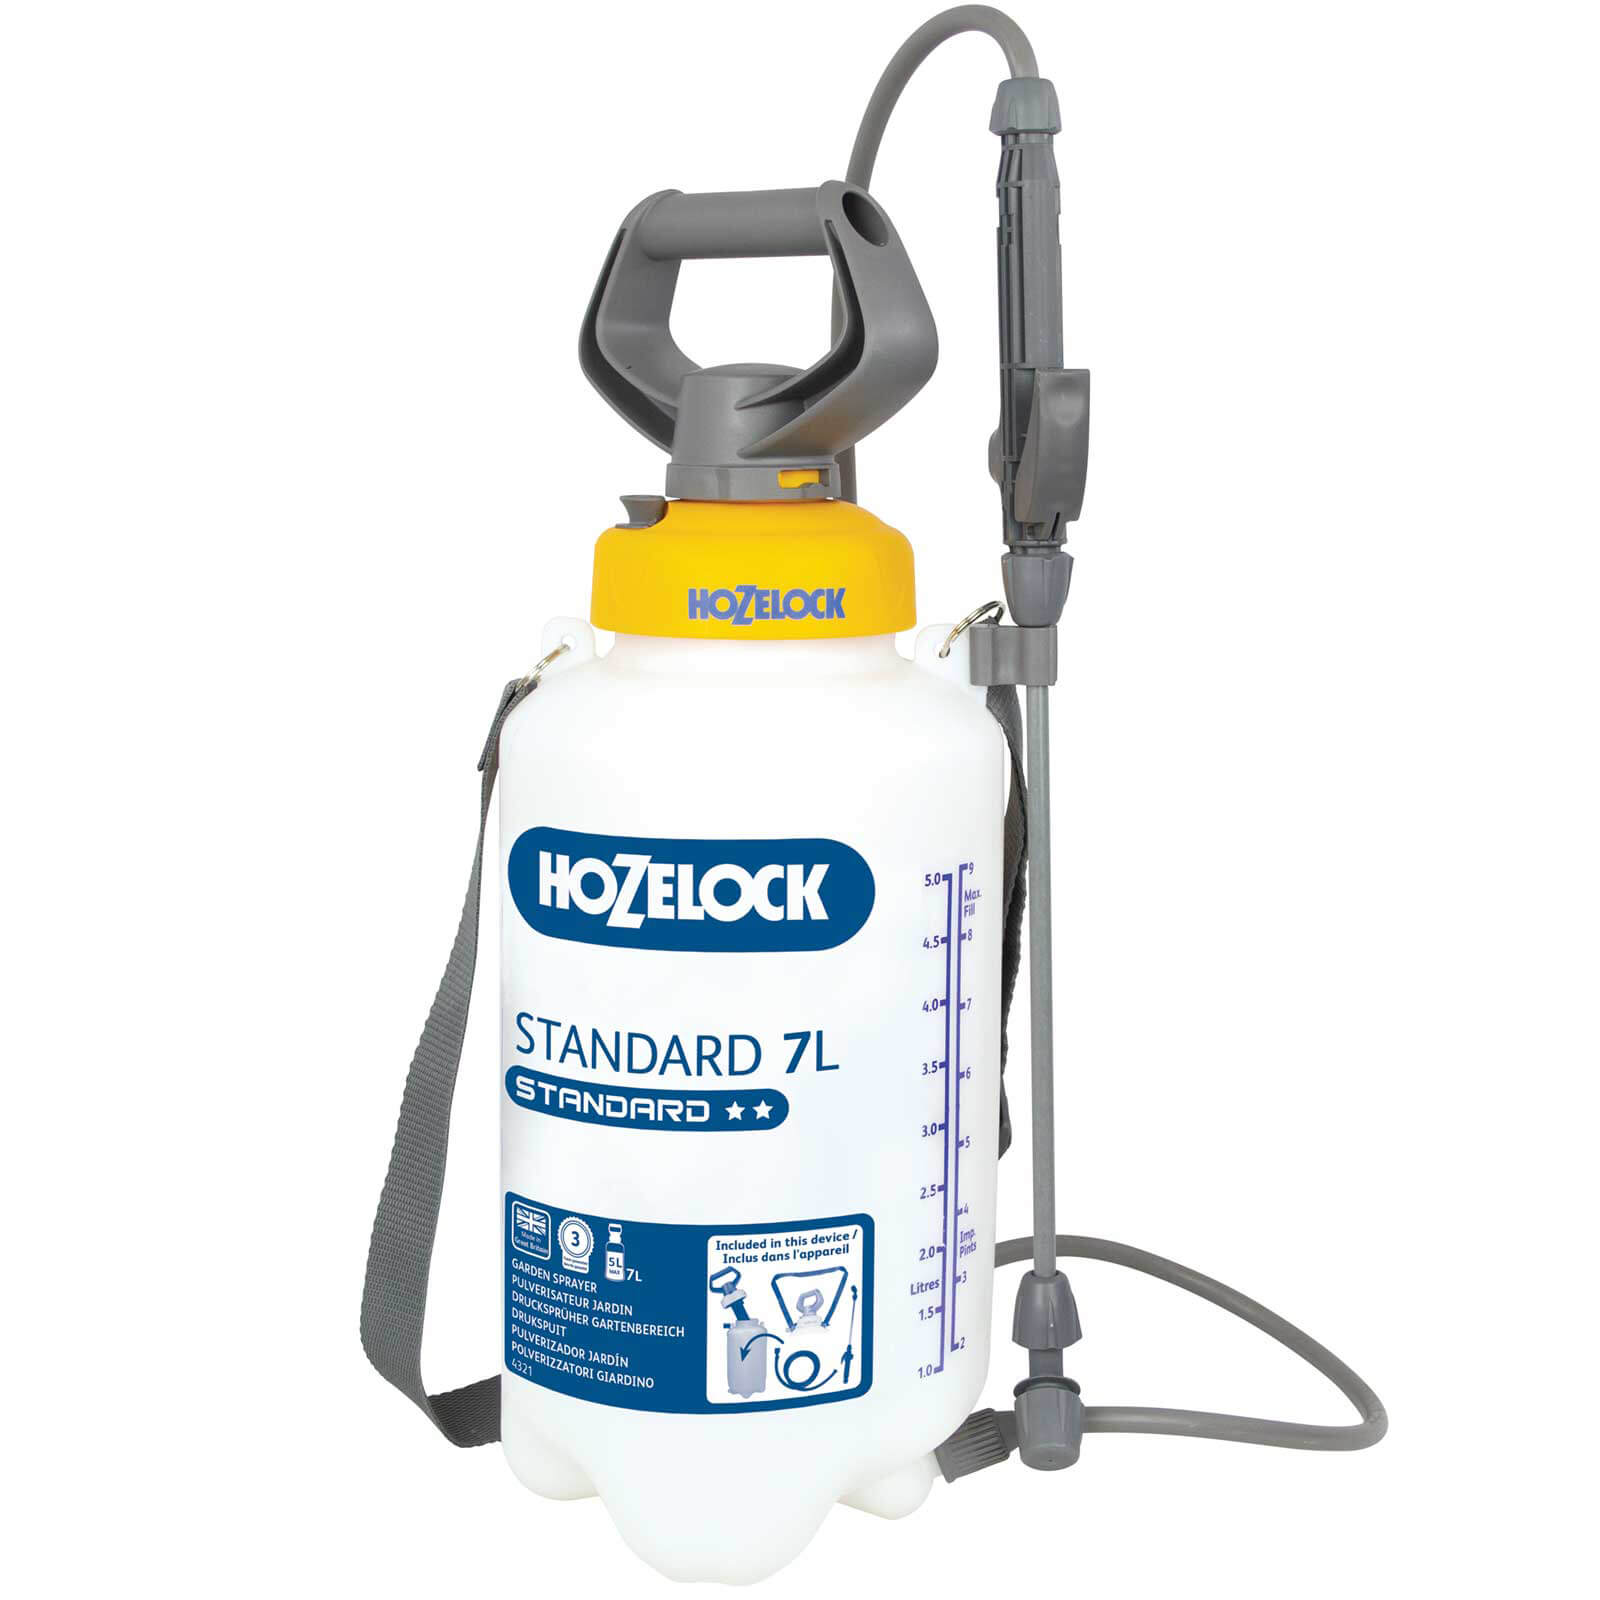 Image of Hozelock STANDARD Water Pressure Sprayer 7l